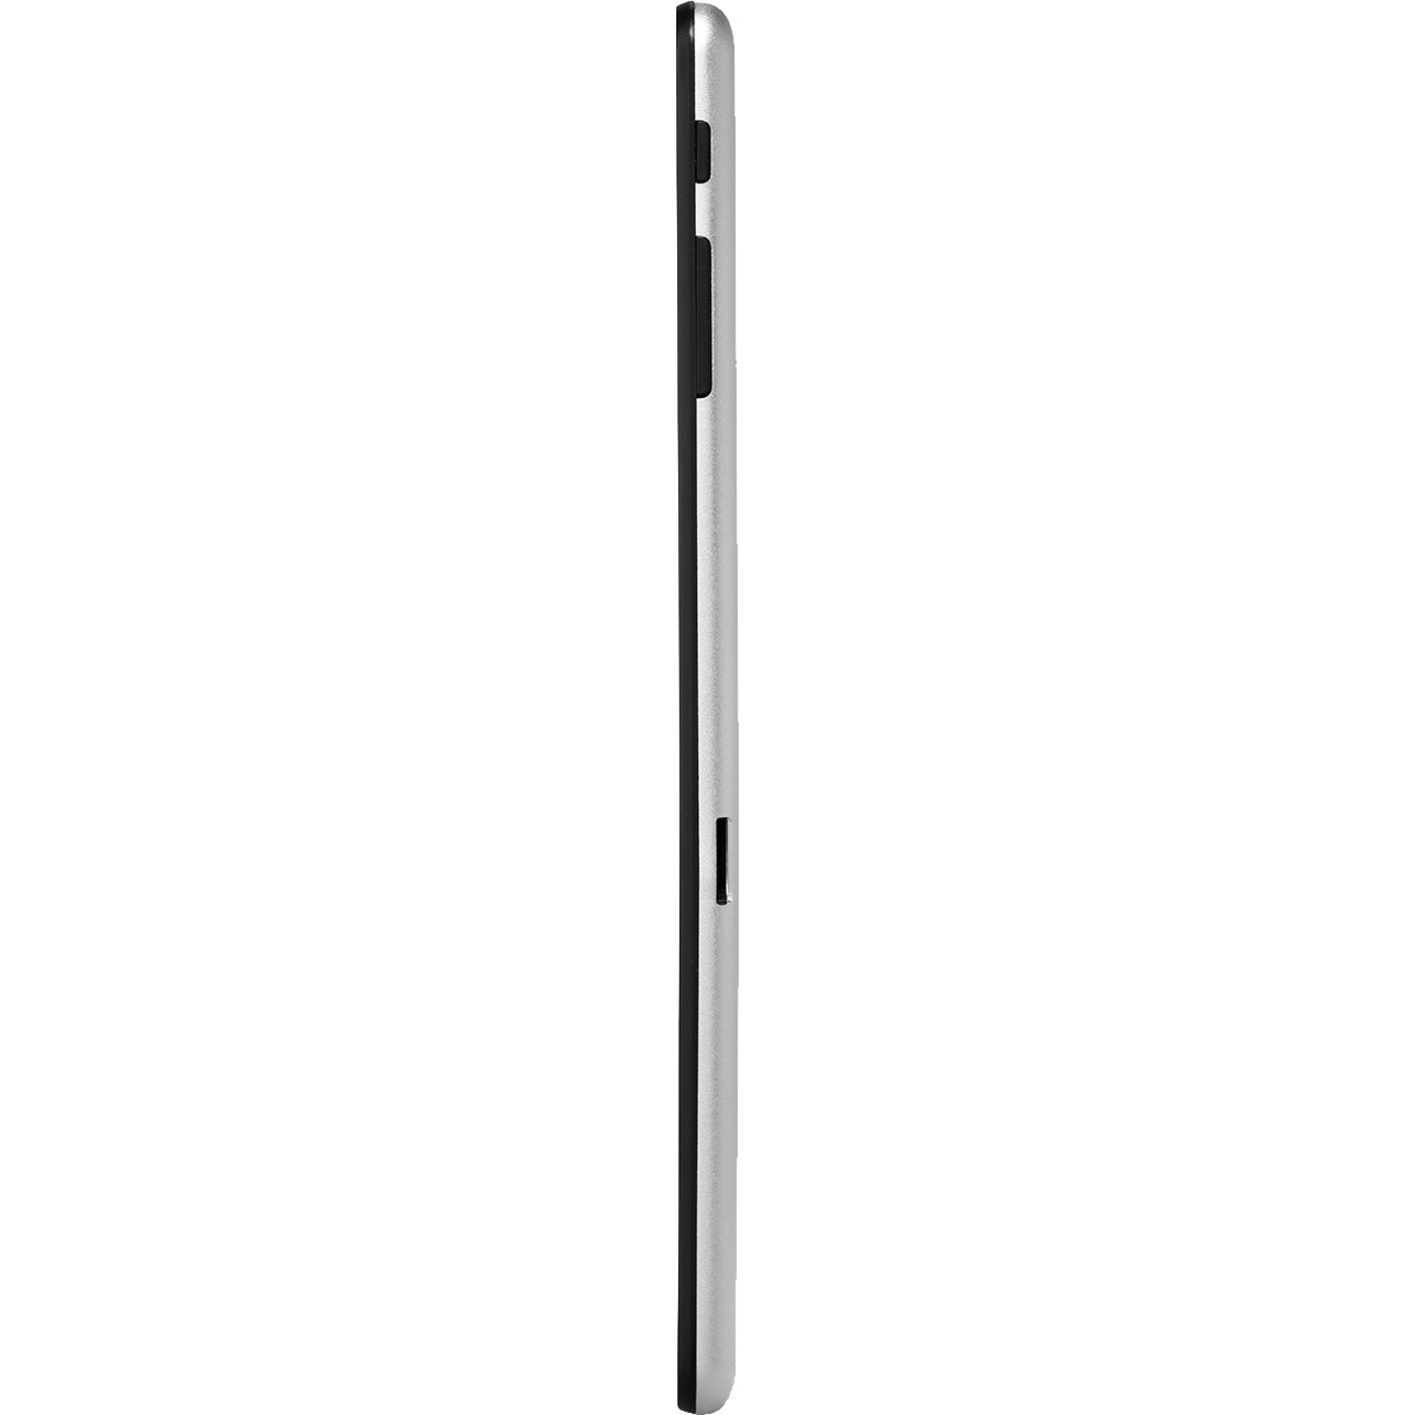 AARP RealPad MA7BX2 Tablet, 7.9", 1 GB, 16 GB Storage, Android 4.4 KitKat, Black - image 3 of 6